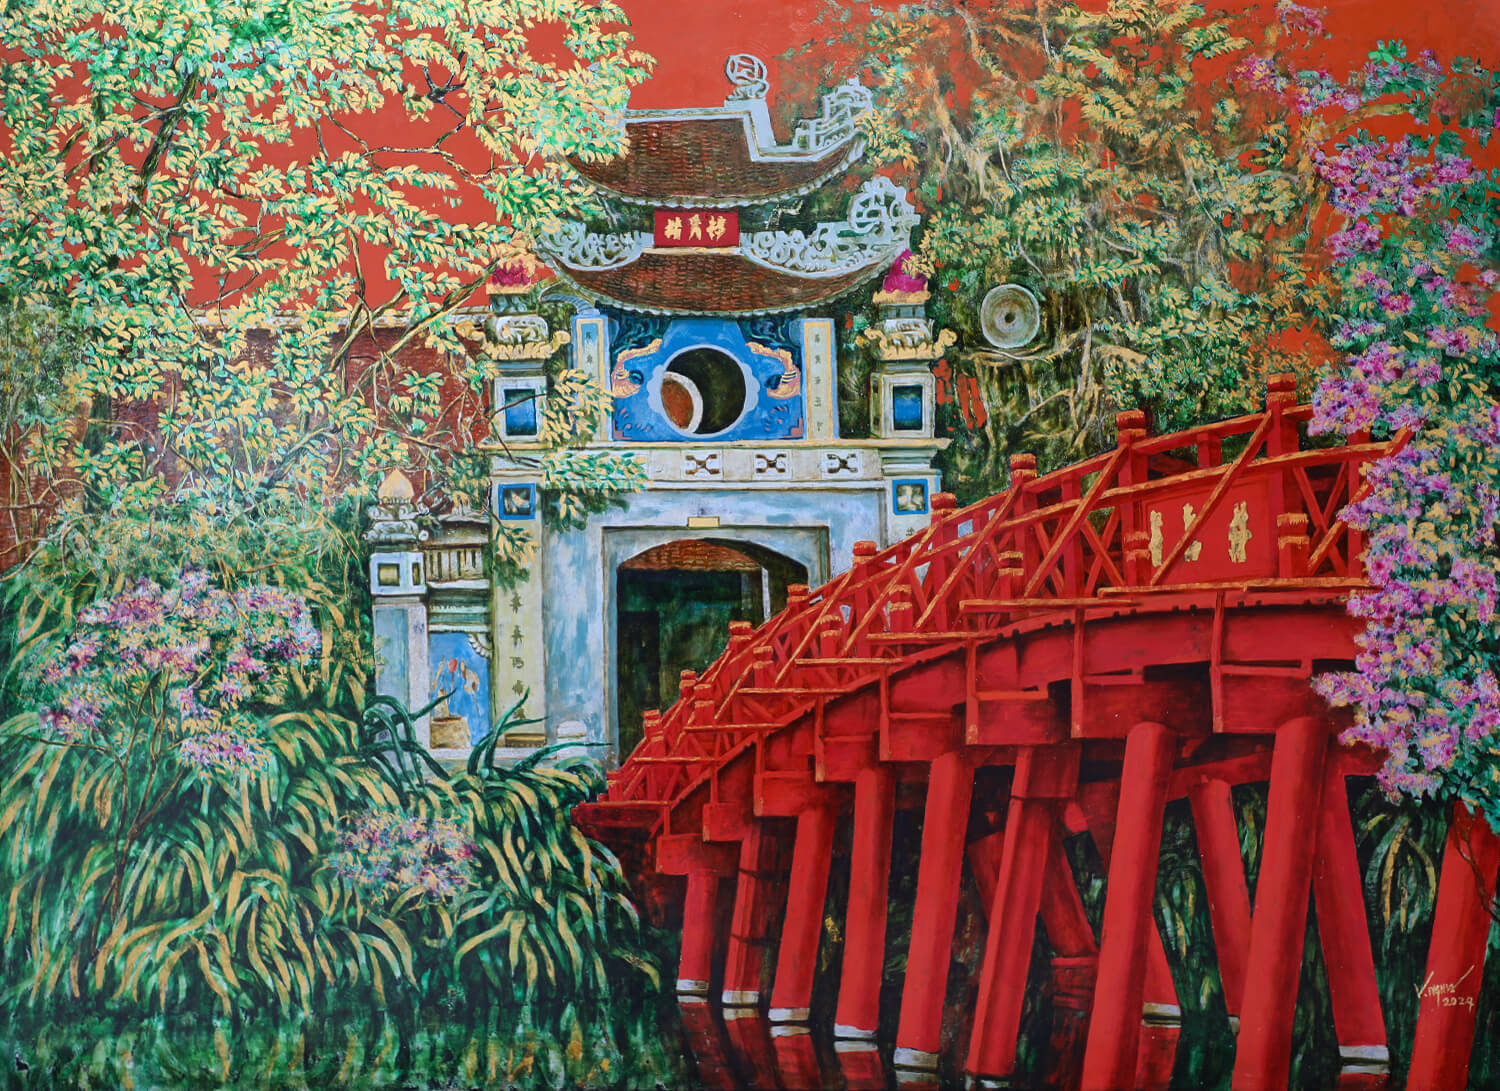 The Huc Bridge Vietnamese Lacquer painting by artist Nguyen Van Nghia